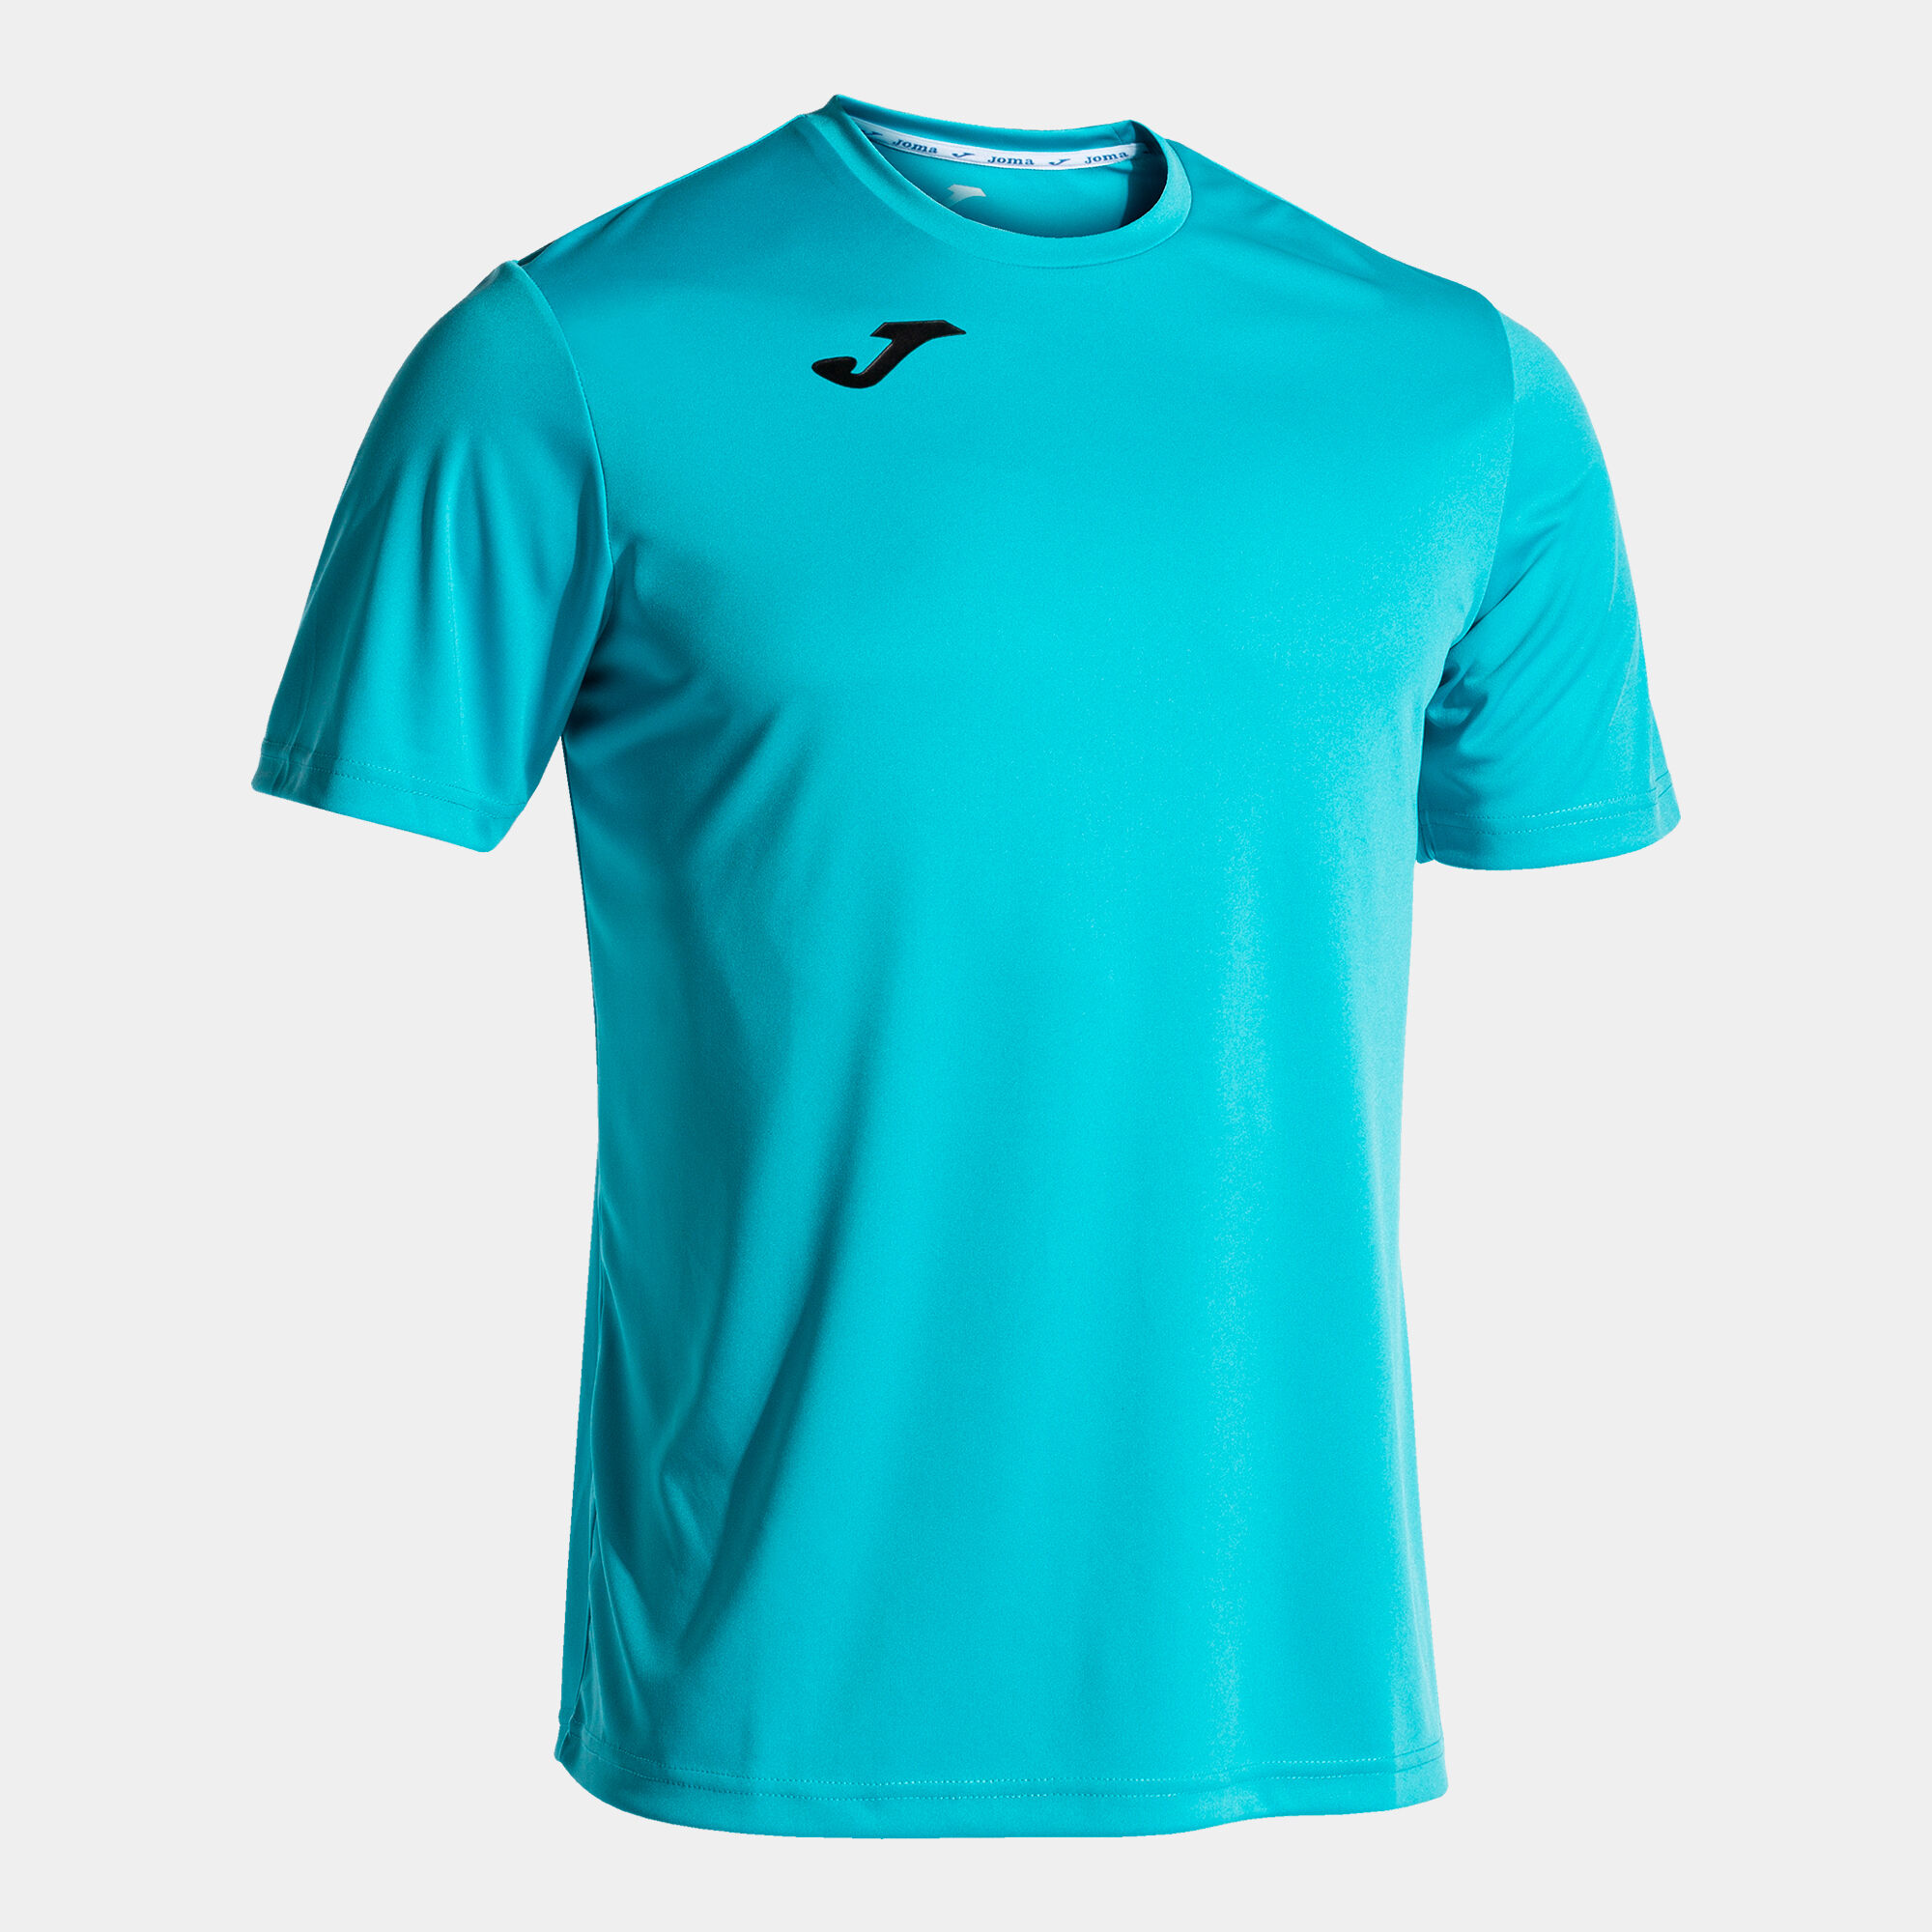 Shirt short sleeve man Combi fluorescent turquoise